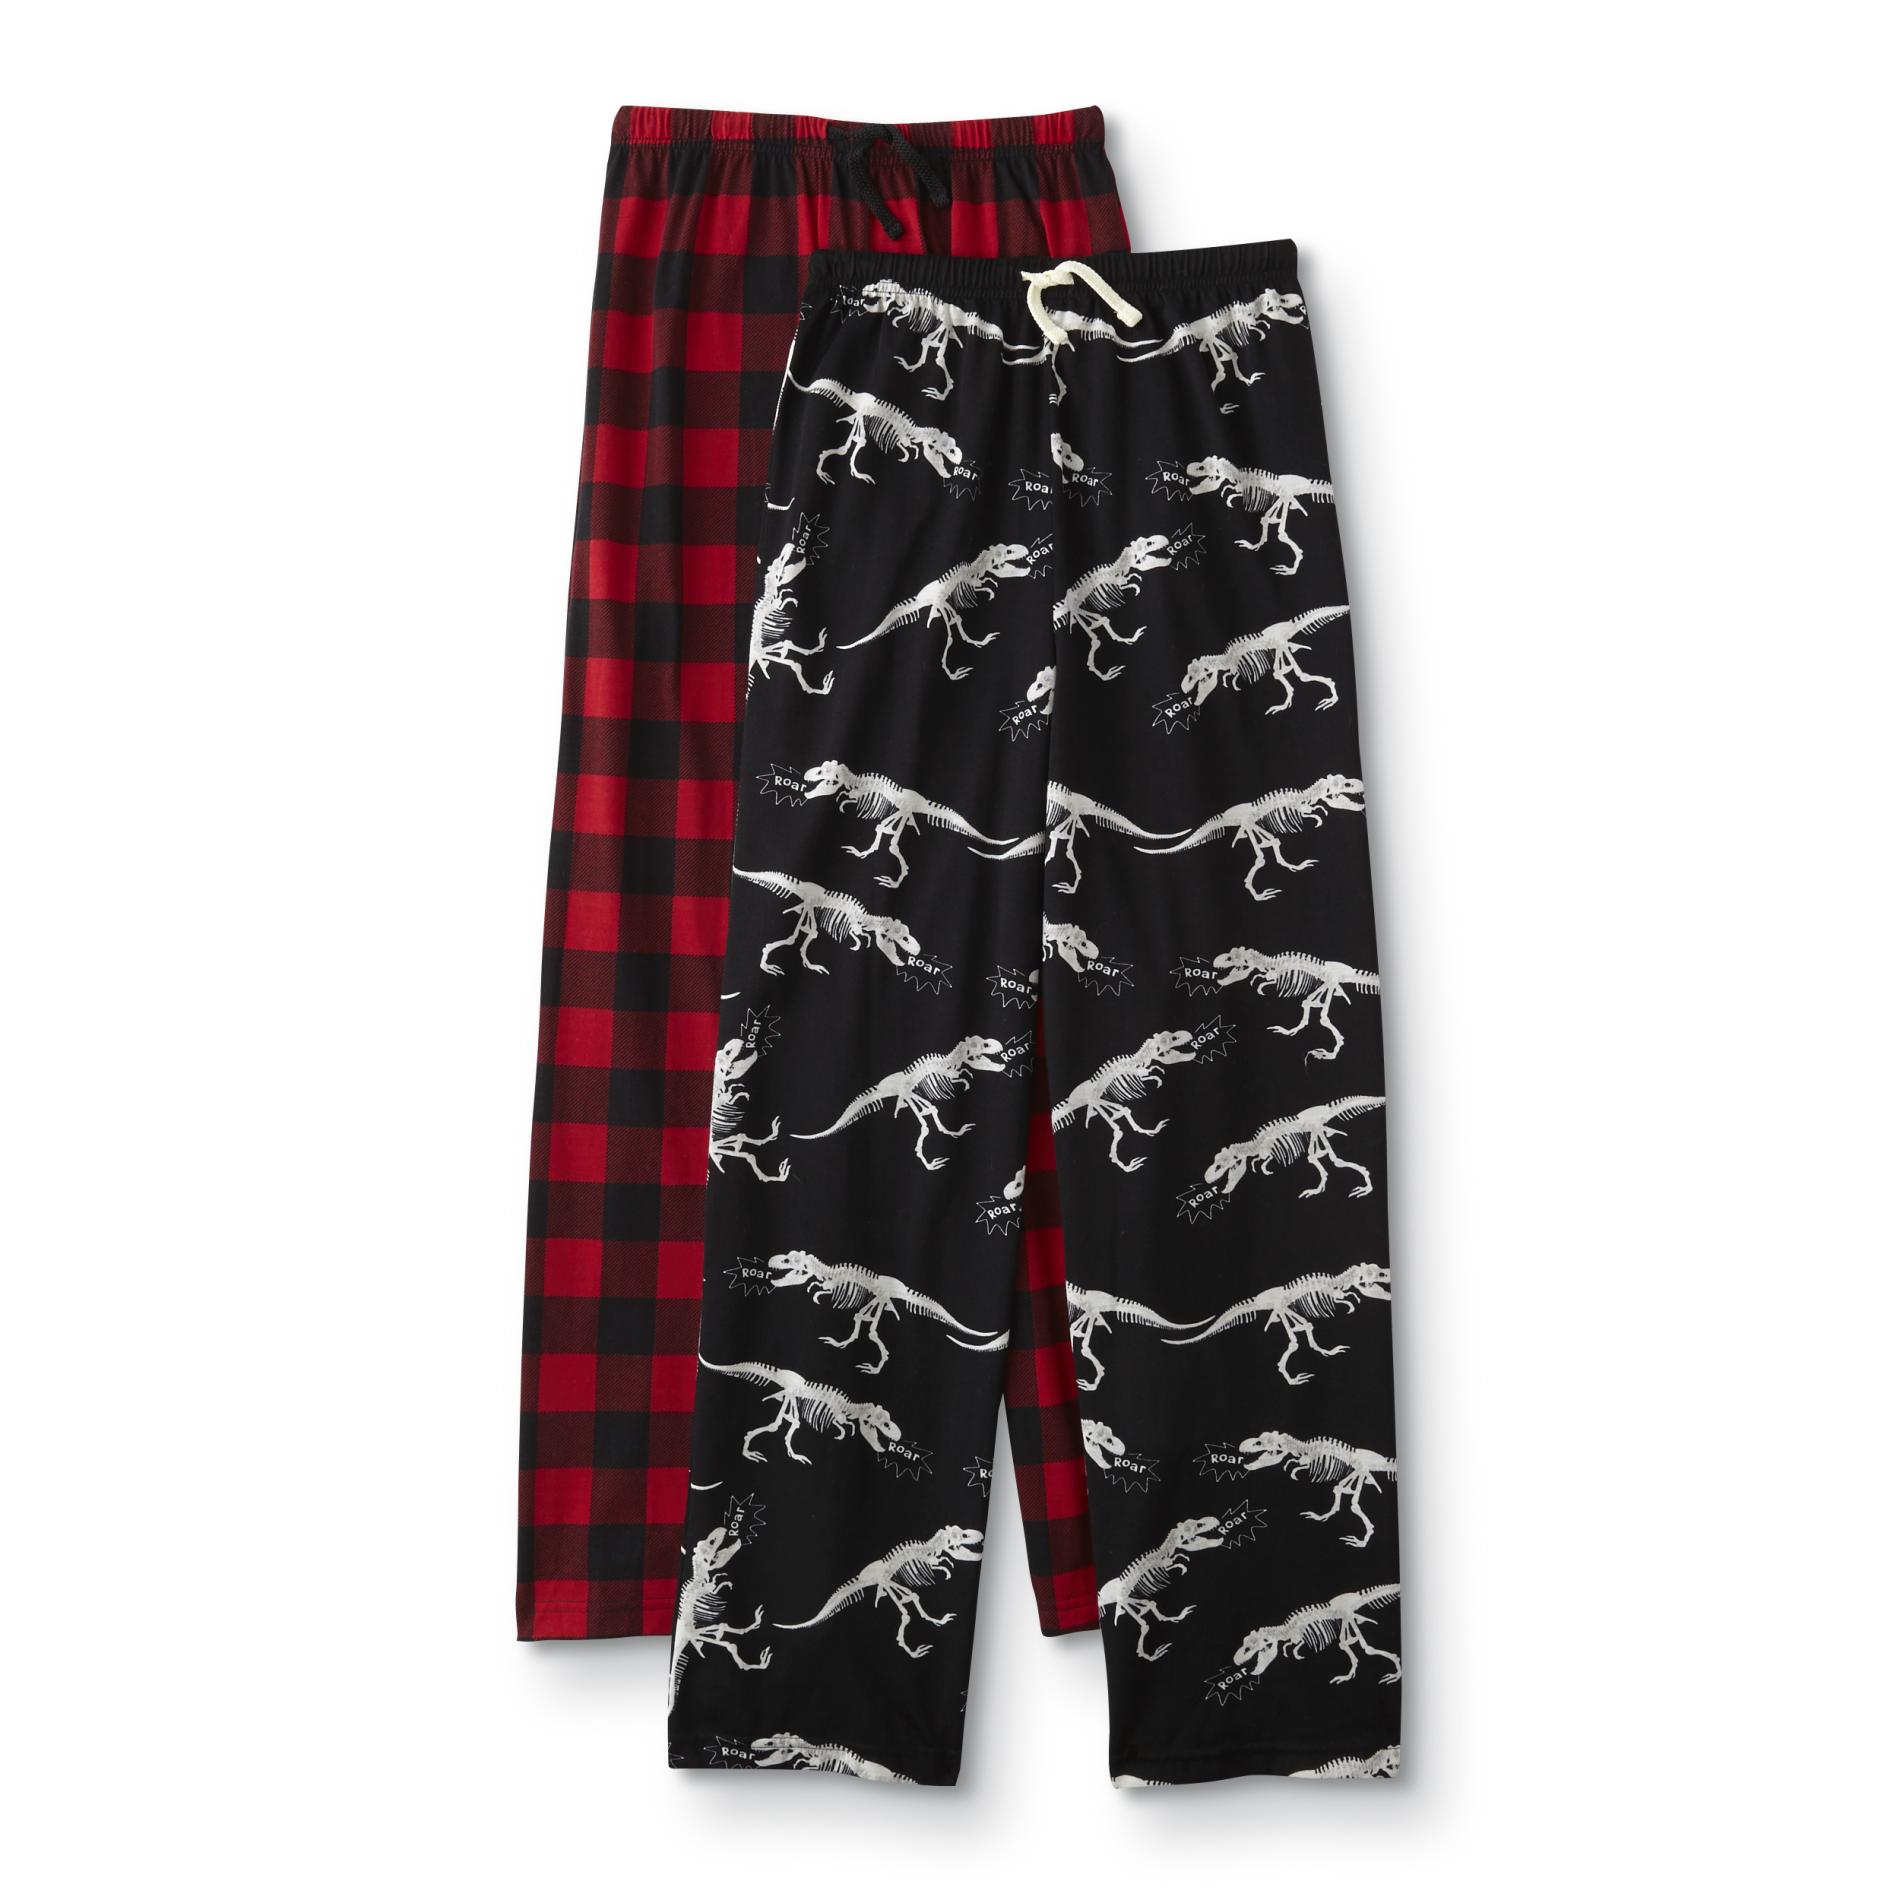 Joe Boxer Boys' 2-Pack Pajama Pants - Dinosaur/Buffalo Check